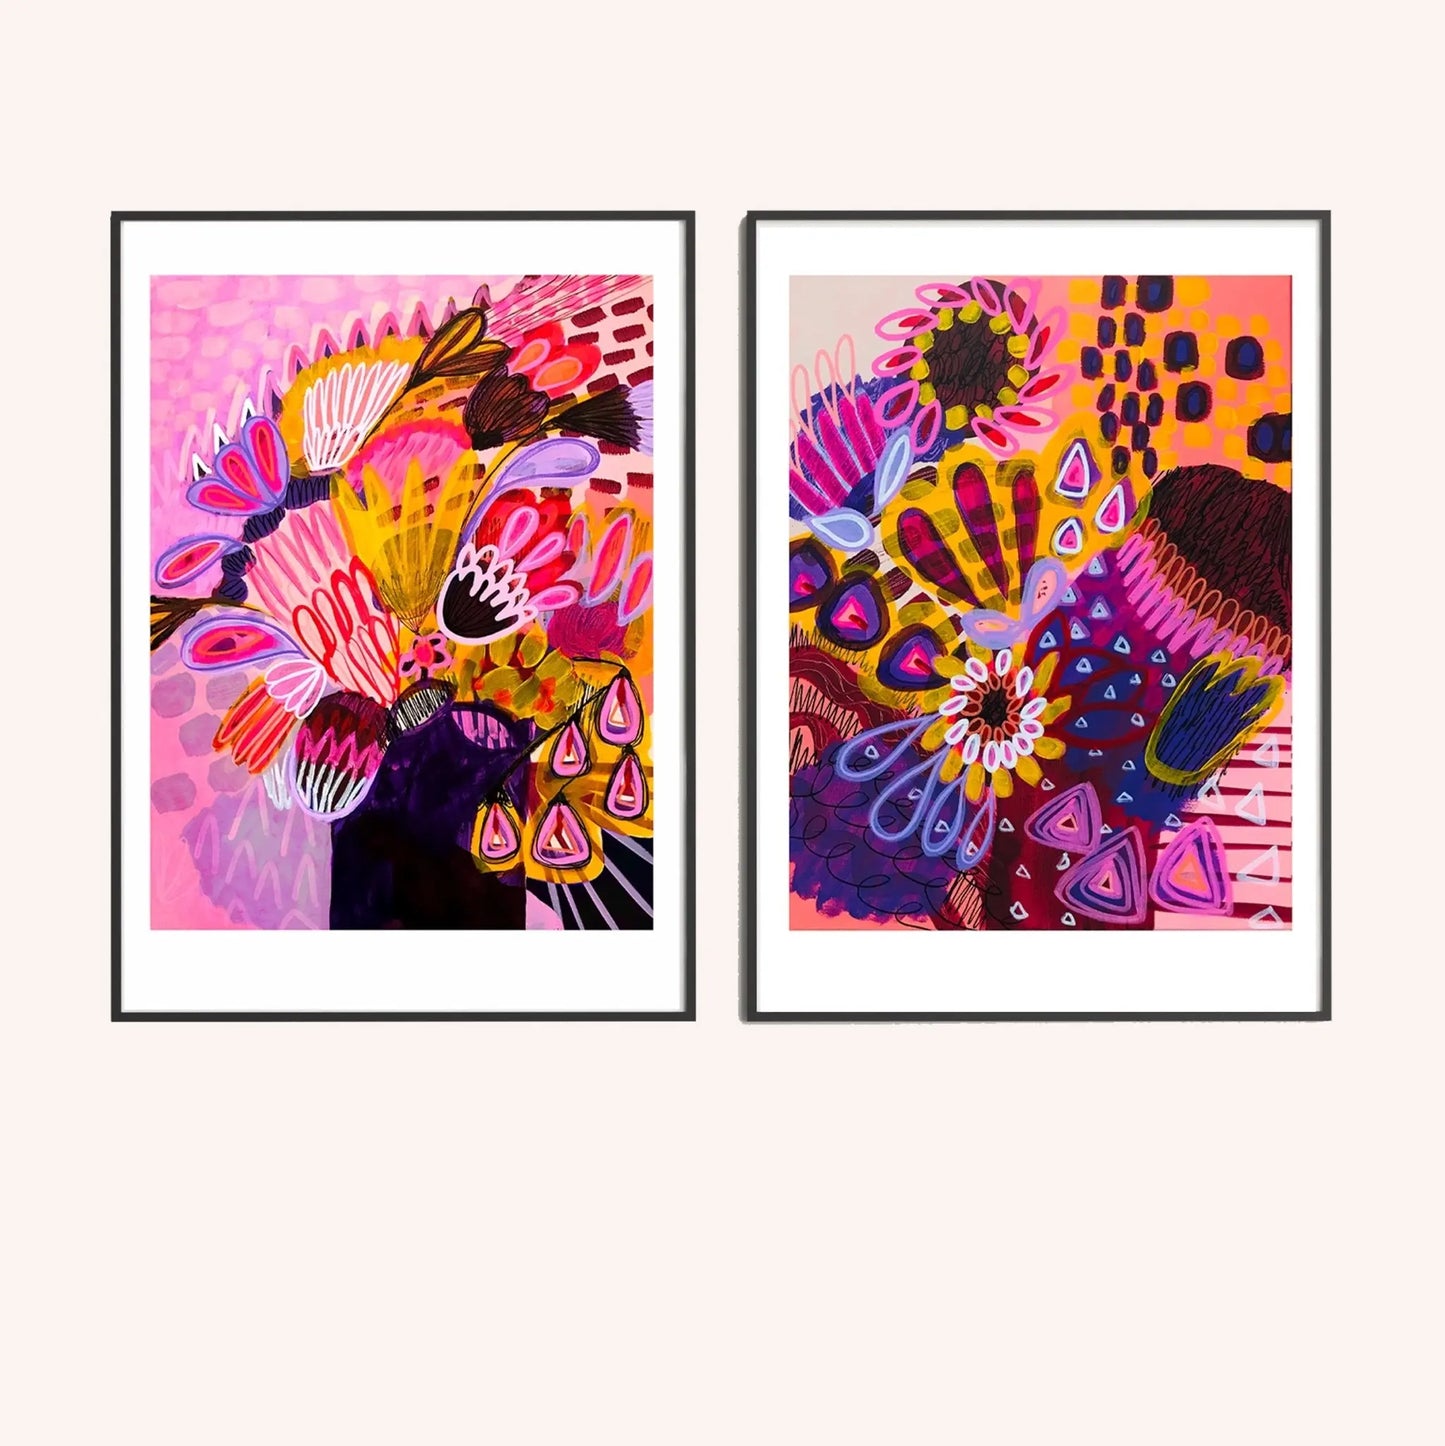 Abstract Art Print Set with Australian Native Flowers - Kirsten Katz